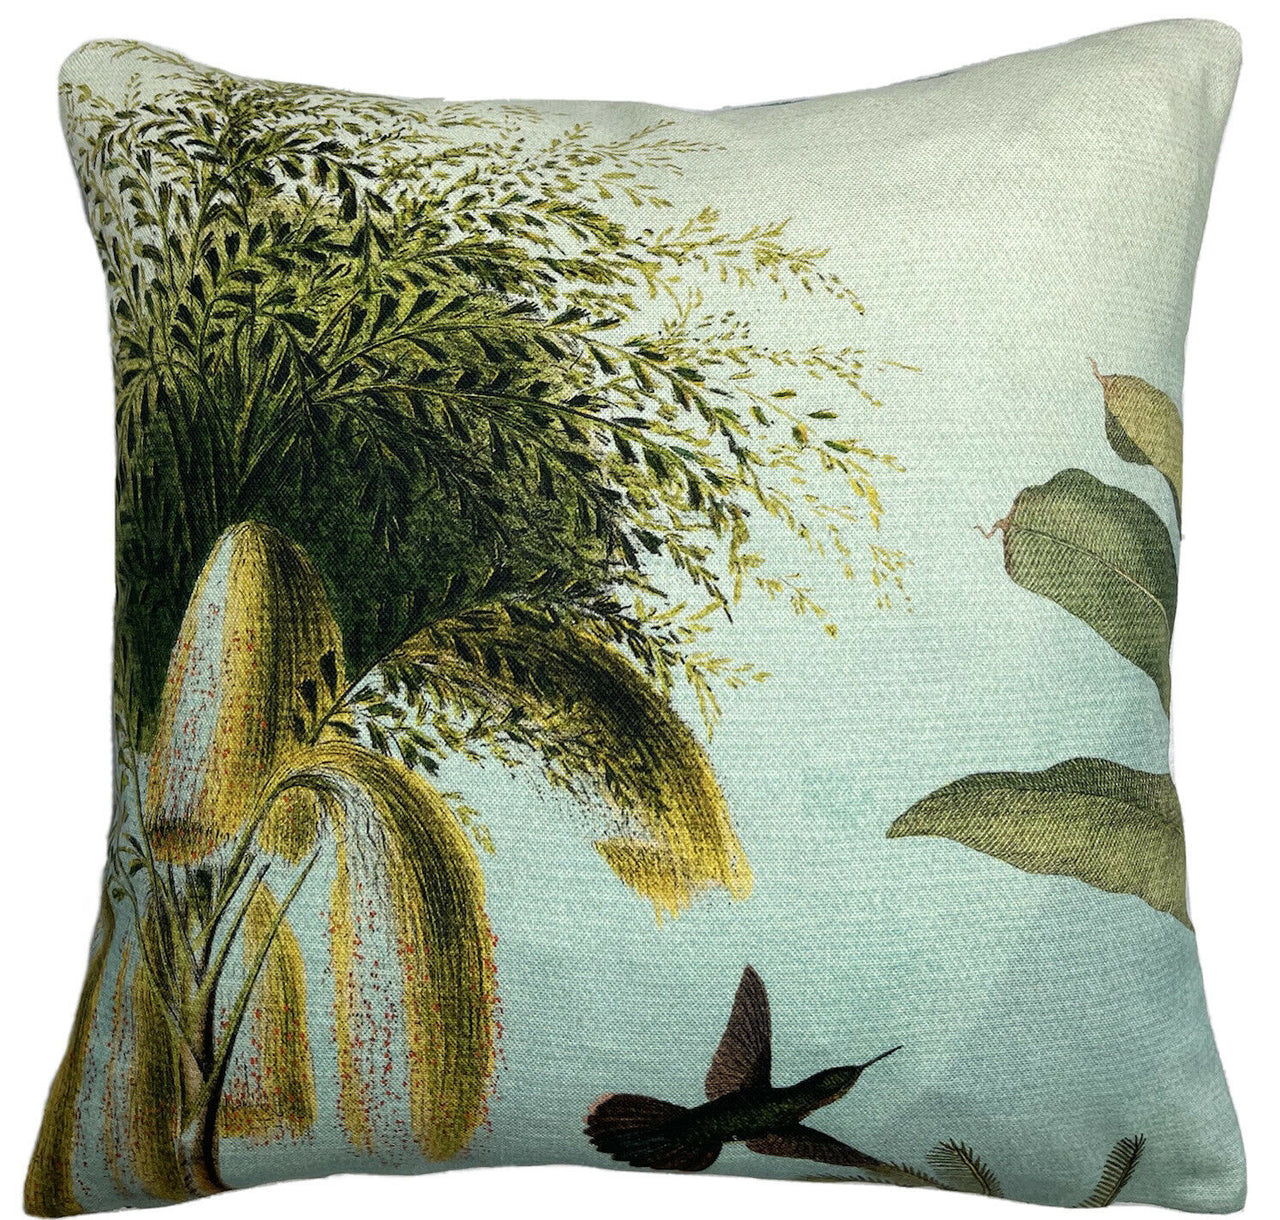 Jungle Animals Decorative Throw Pillow Case Animal Cushion Cover Botanical Sofa Decor